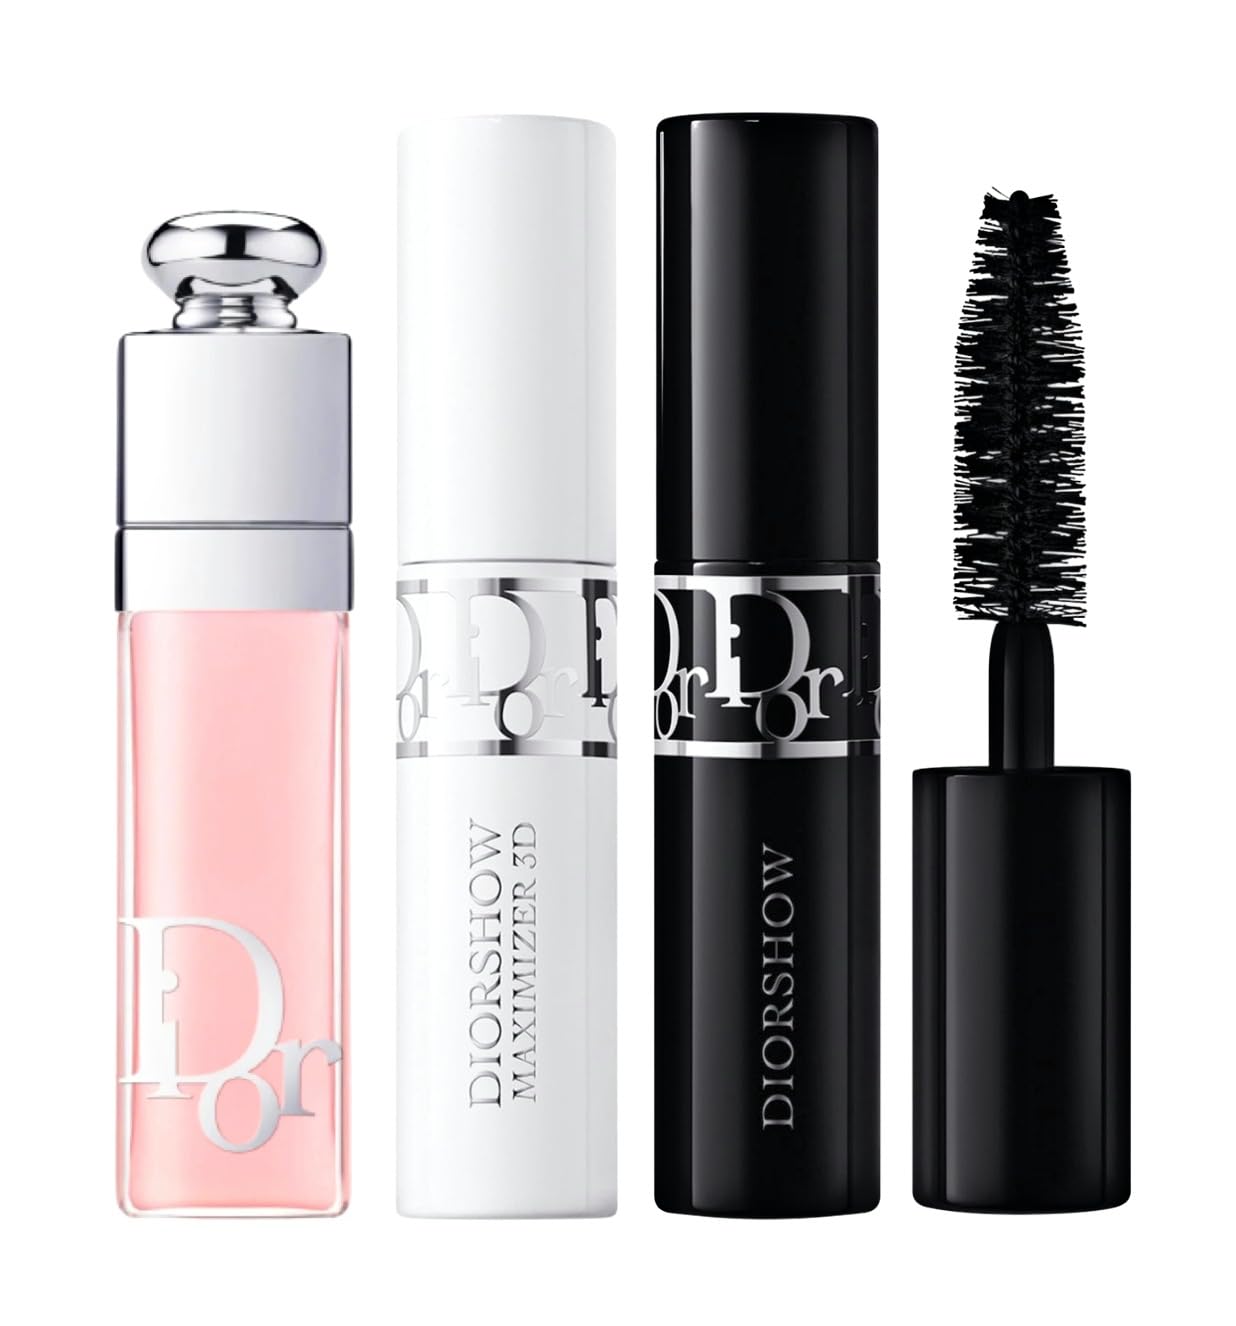 Dior Addict Mini Lip Maximizer 001 Pink, Mascara Base 3D Primer, Buildable Mascara 090 - Travel Size Gift Set